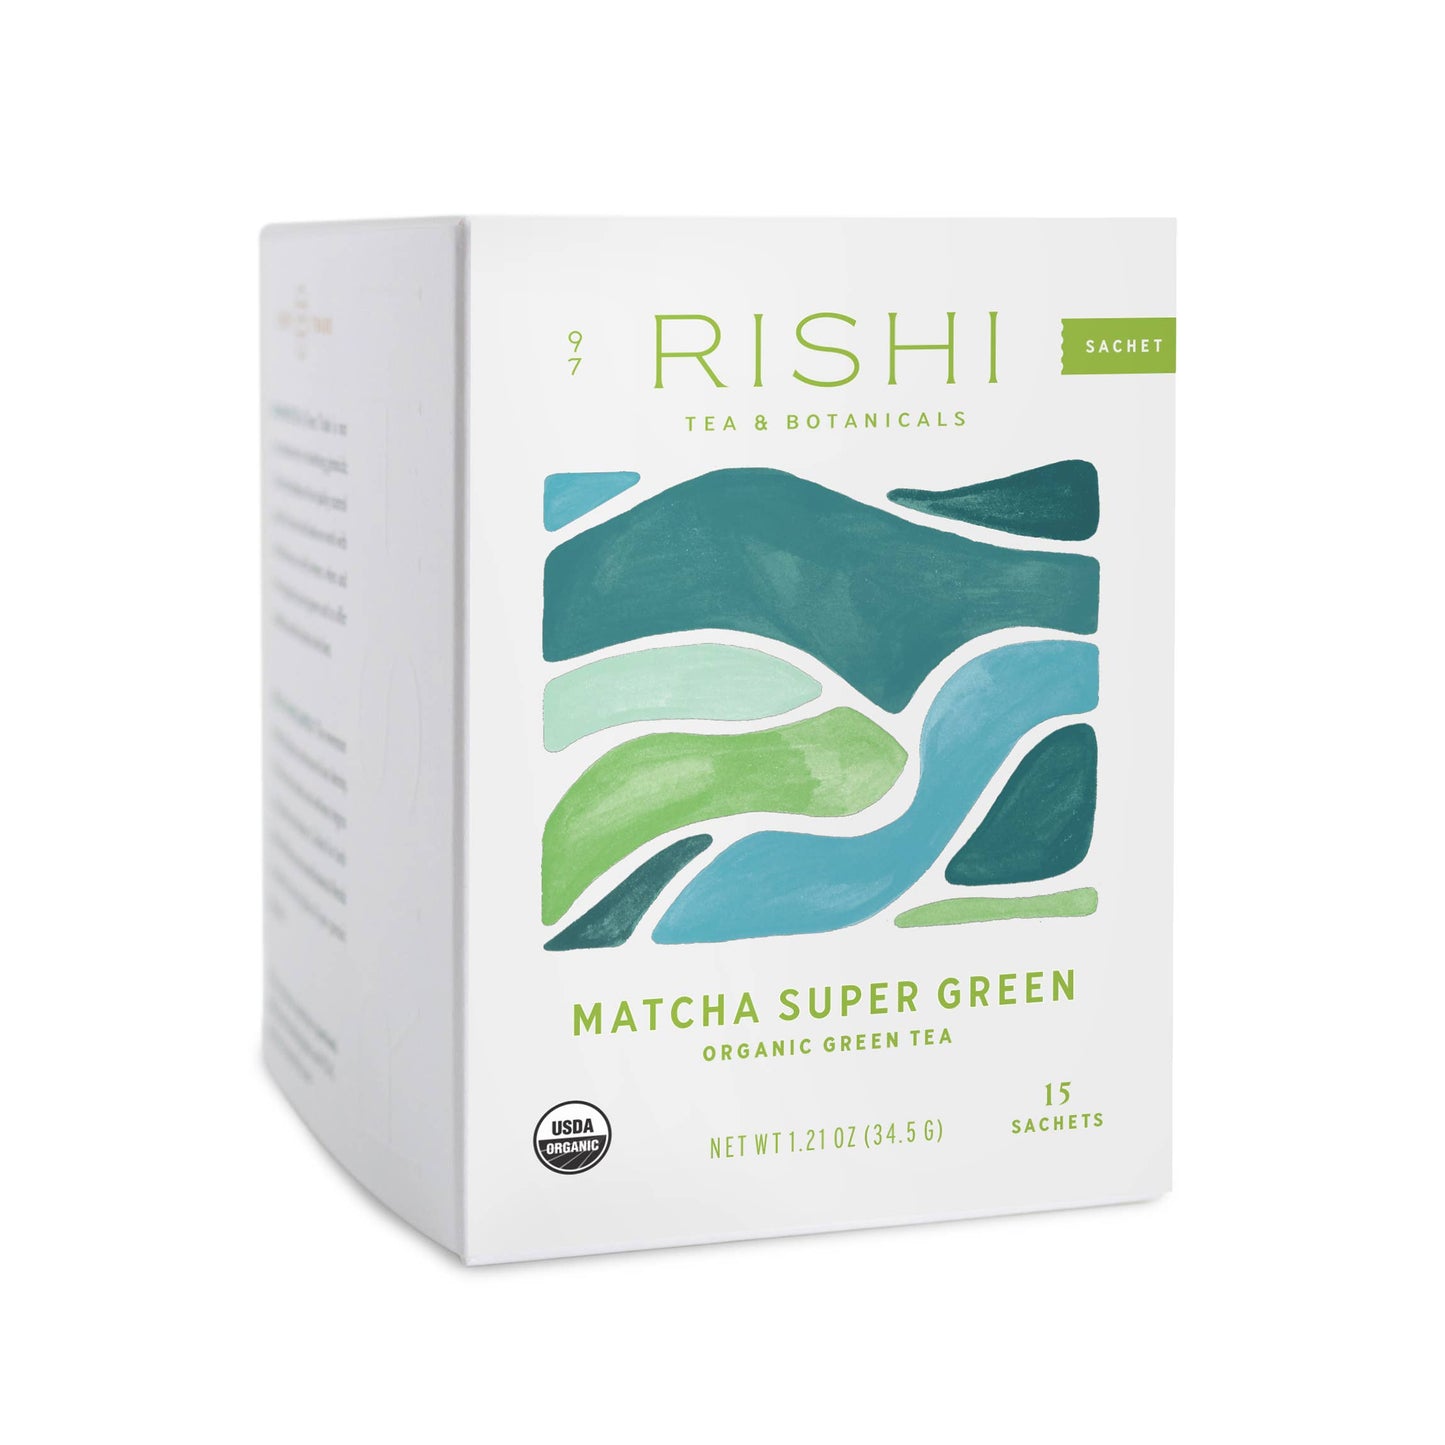 Matcha Super Green Organic Green Tea Sachets by Rishi Tea